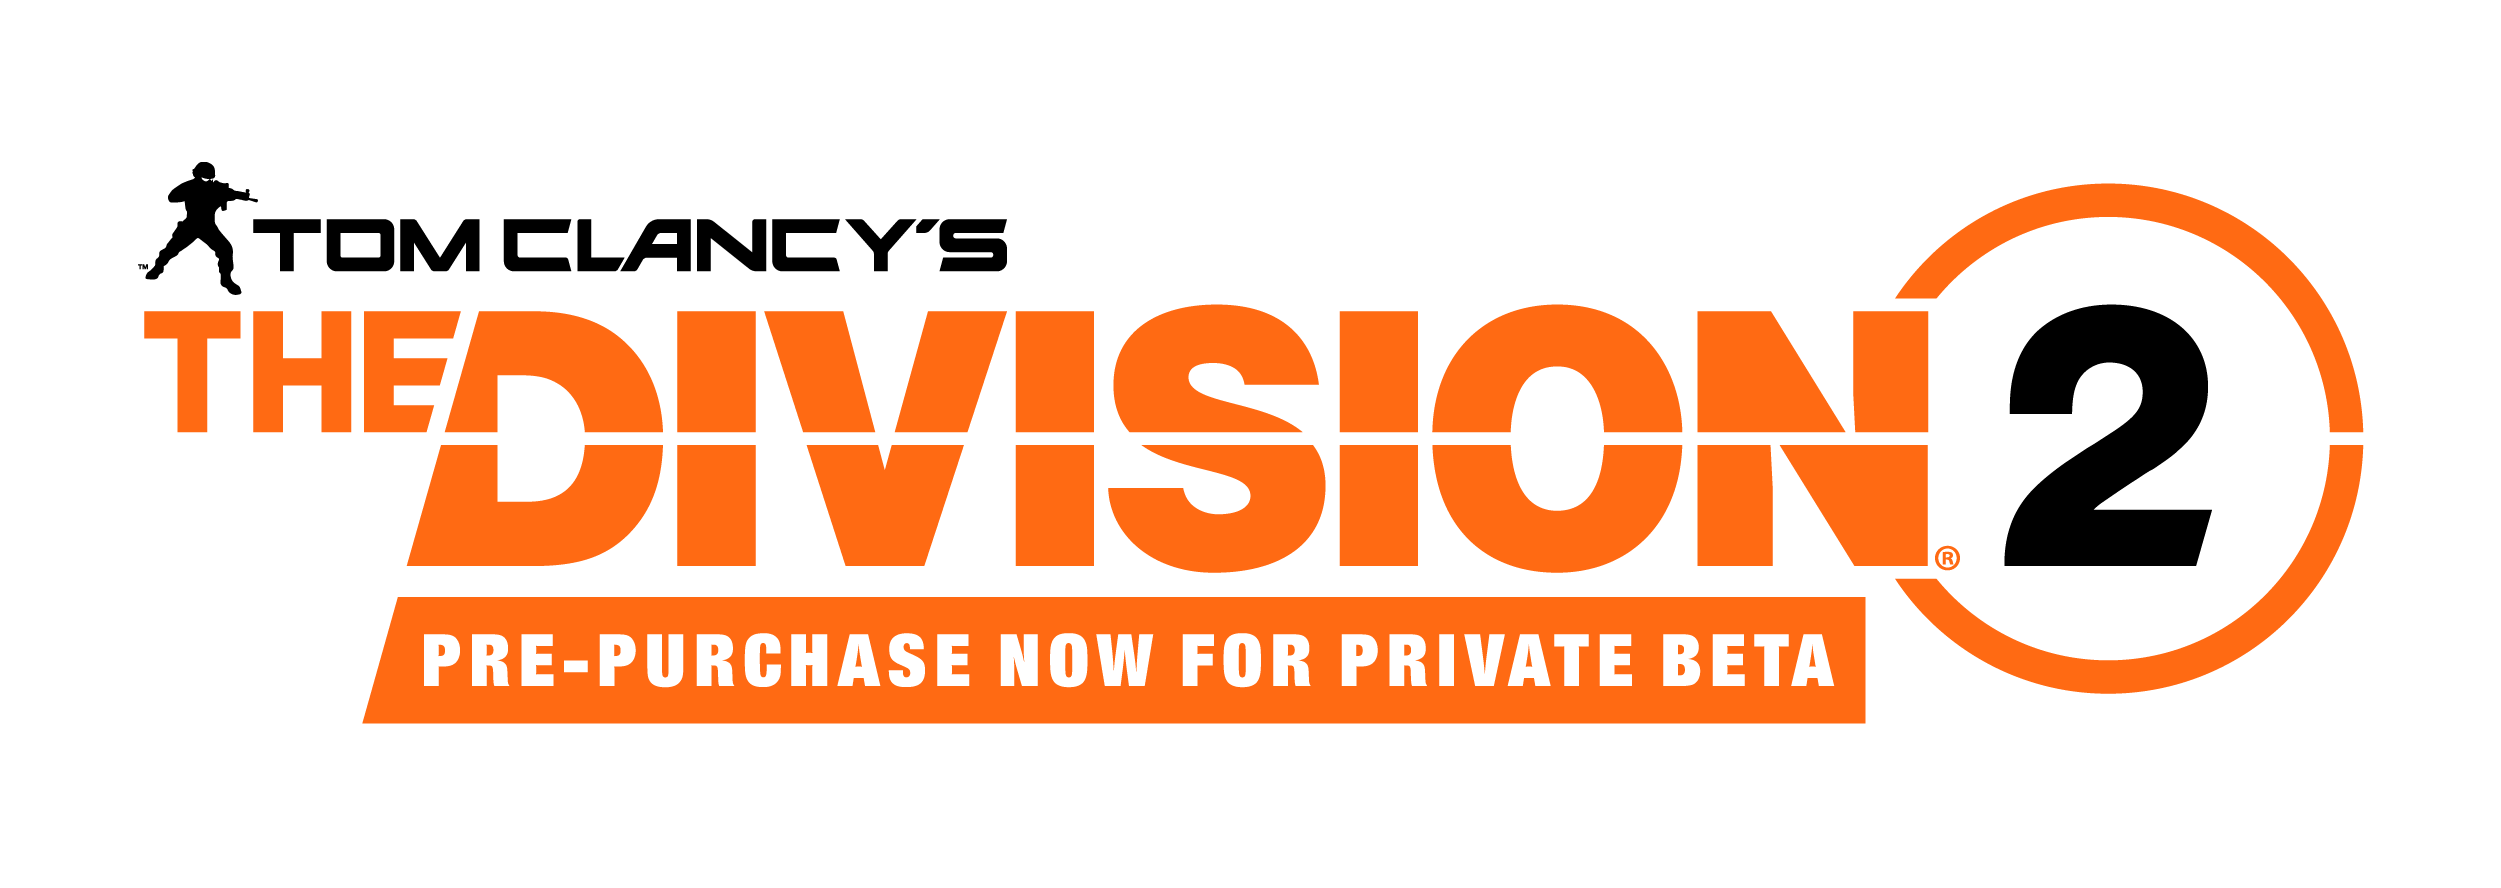 Tom Clancy Division Logo - Private Beta - Private Beta for Tom Clancy's The Division 2